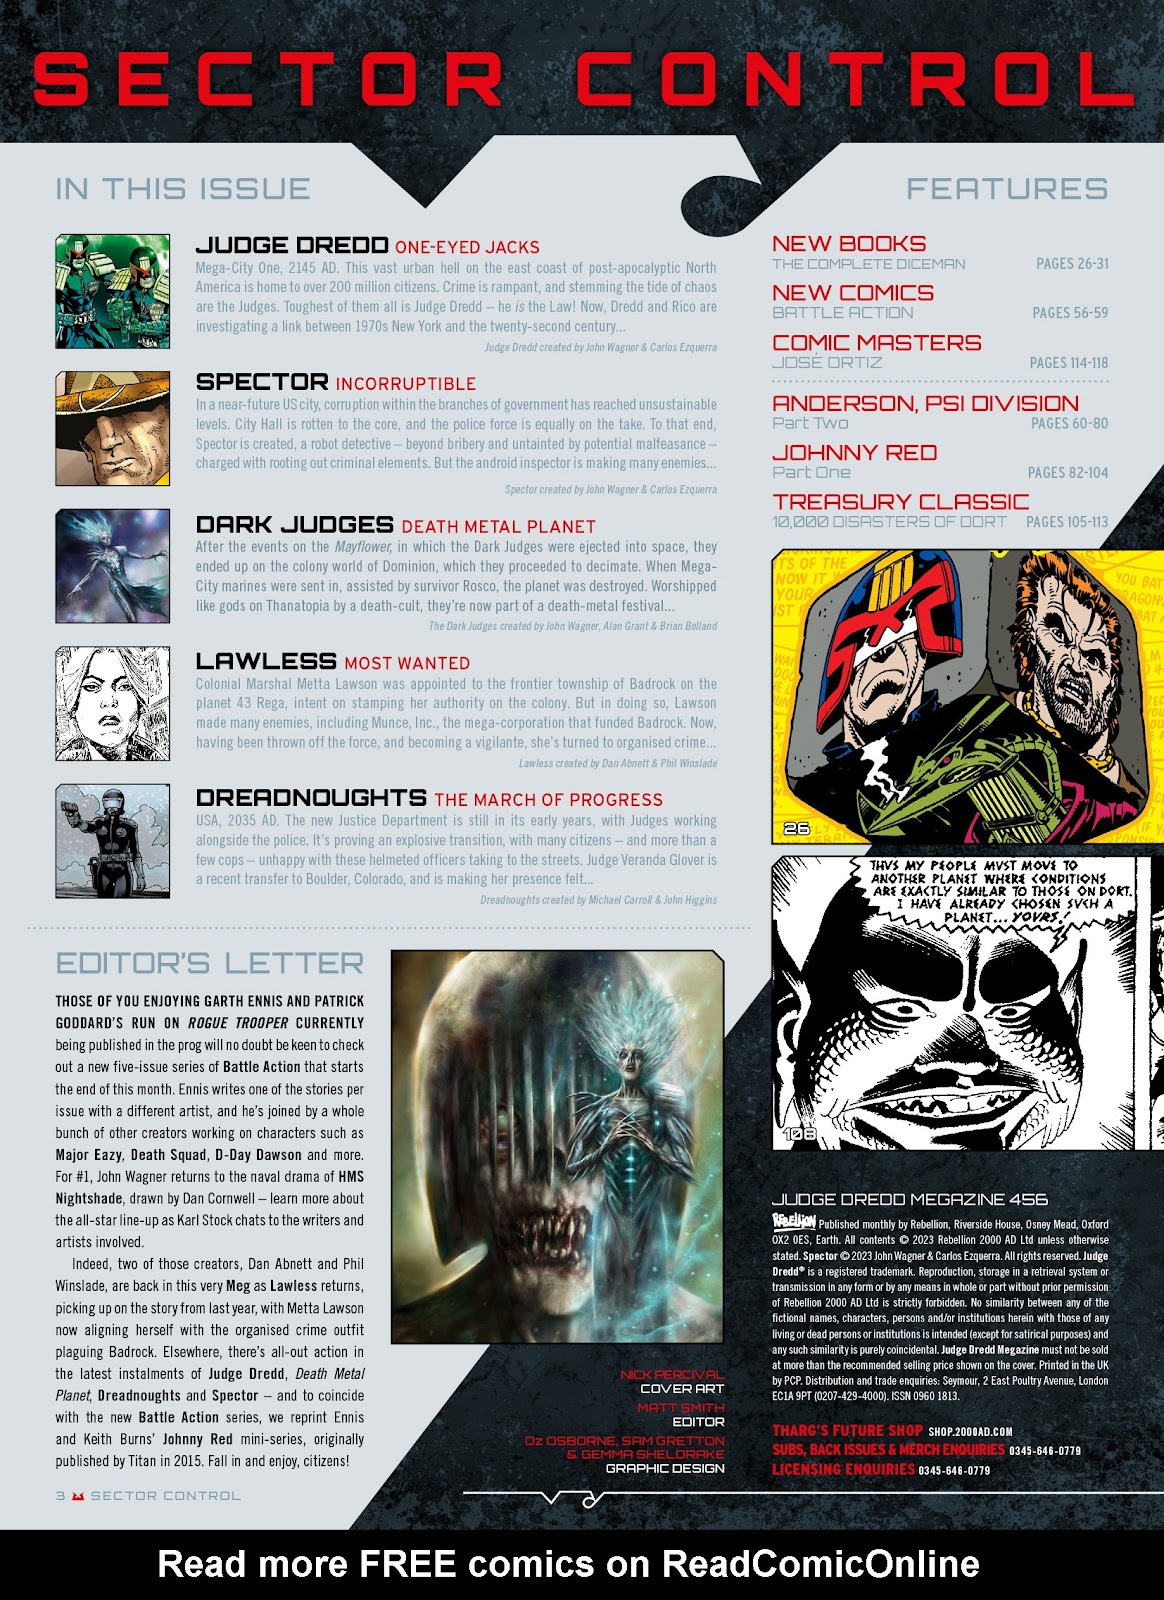 Judge Dredd Megazine (Vol. 5) issue 456 - Page 3